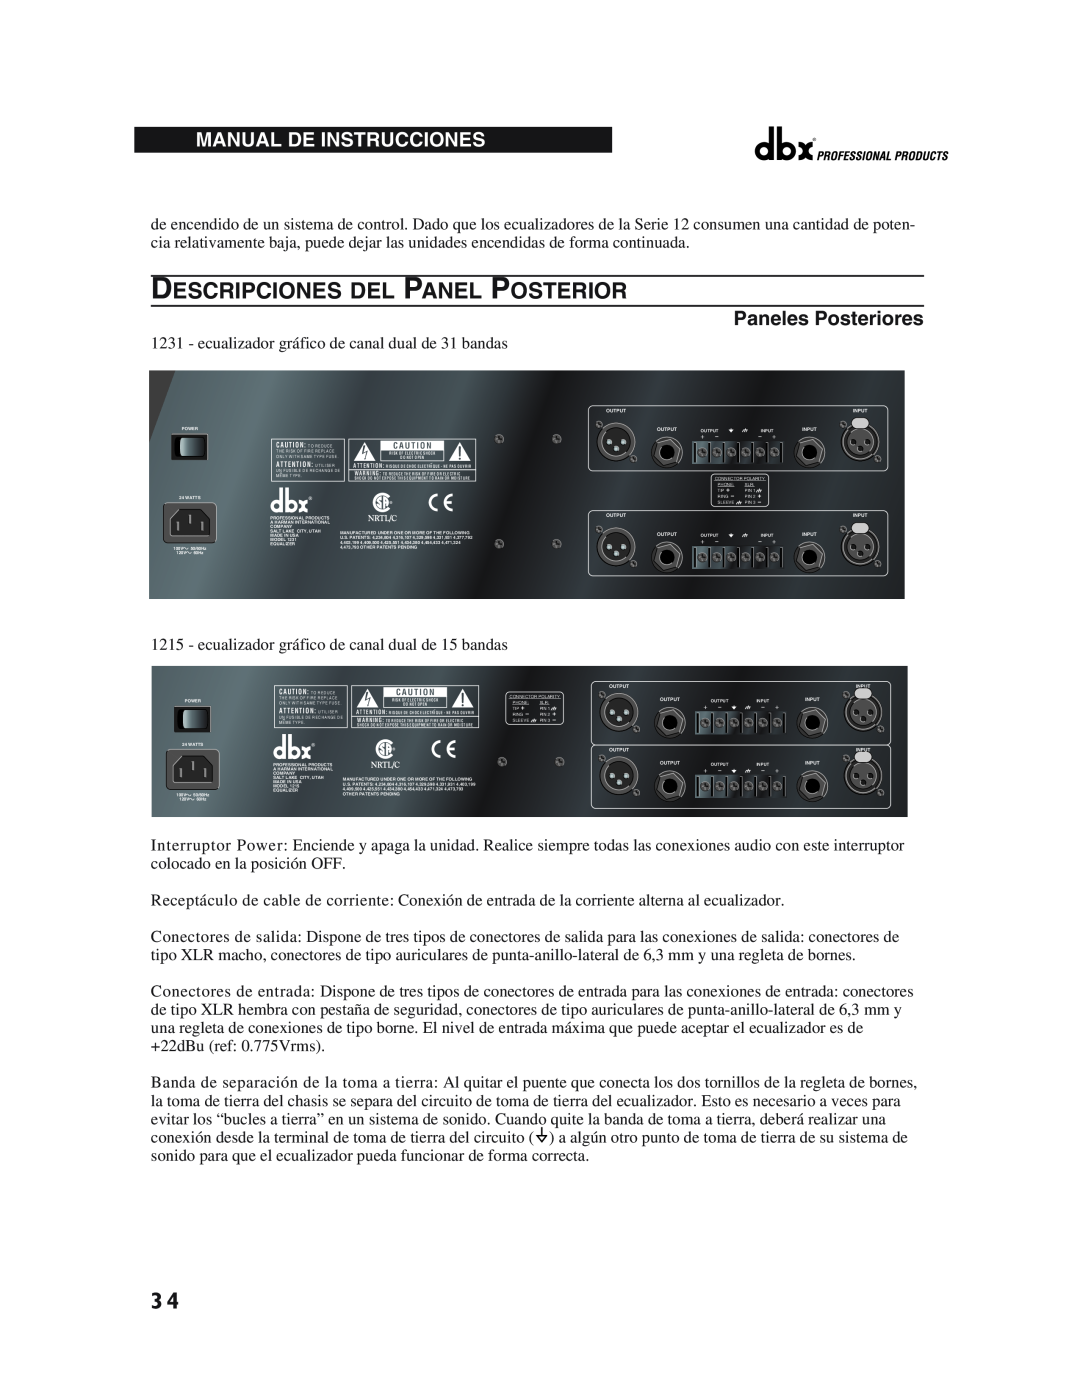 dbx Pro 12 Series operation manual Descripciones Del Panel Posterior, Manual De Instrucciones, Paneles Posteriores 